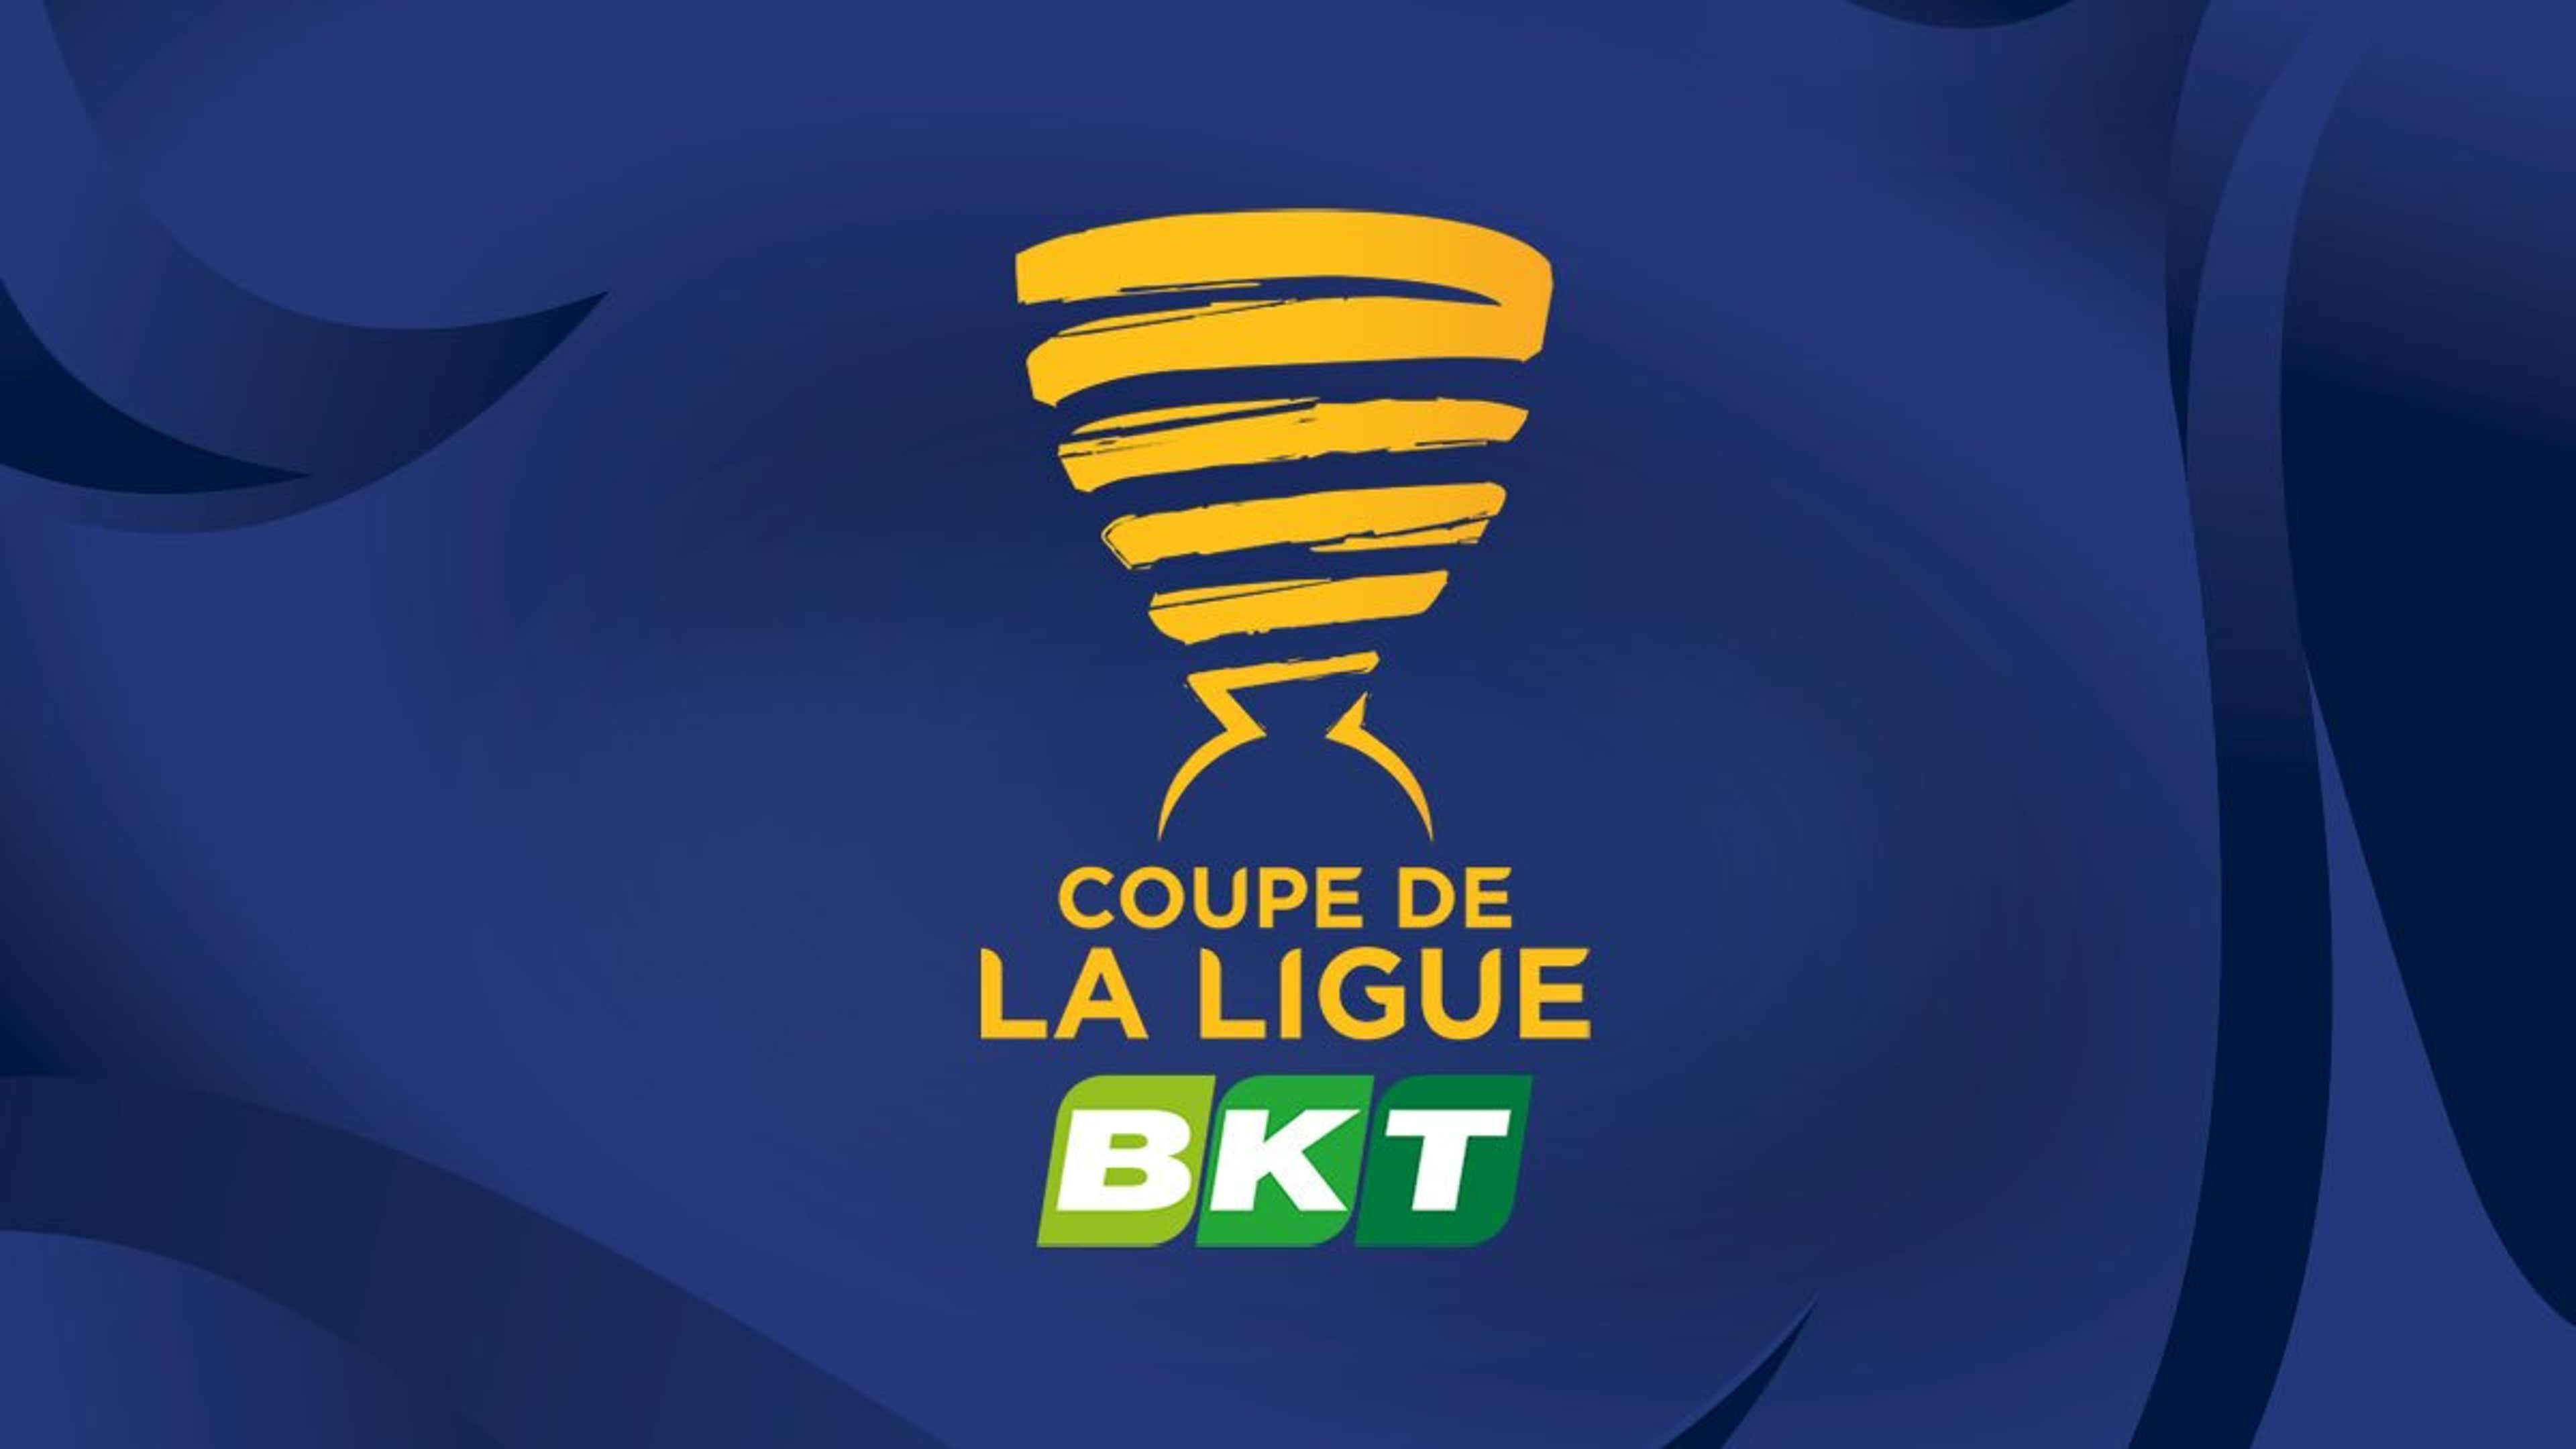 Coupe de la Ligue 2016-17, Football